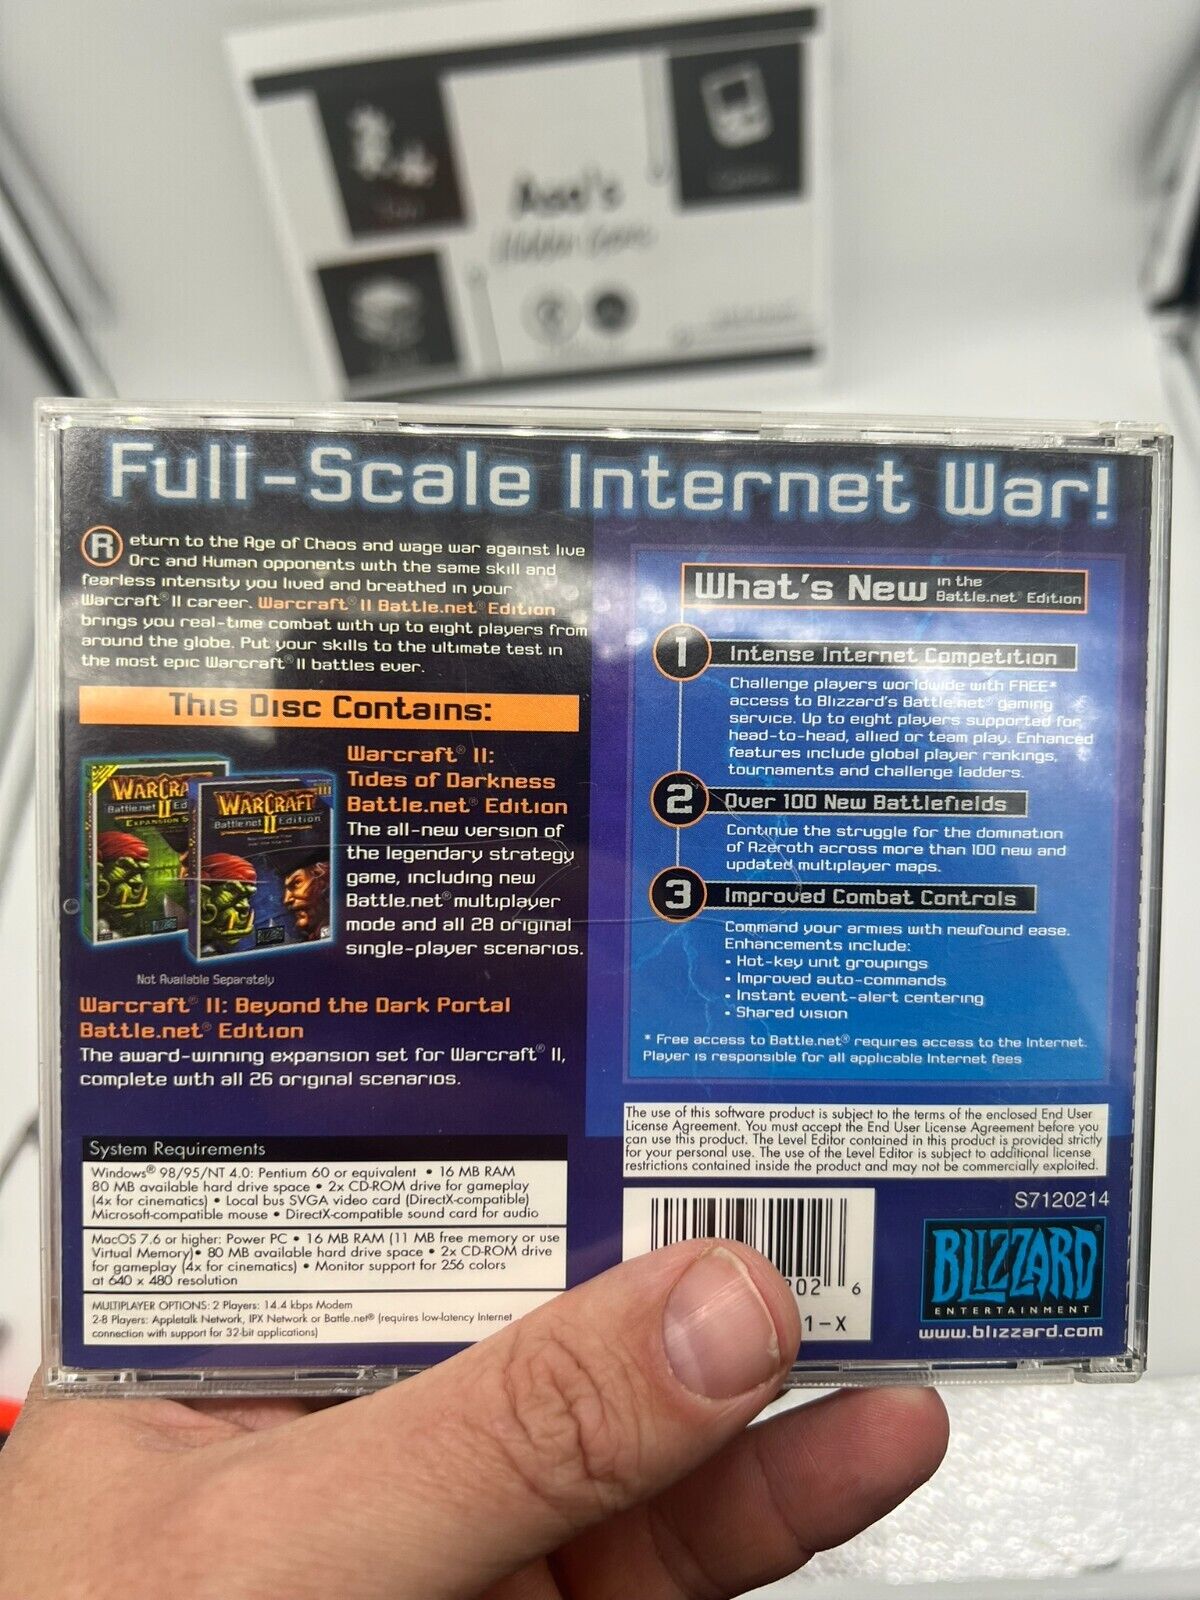 WarCraft II 2 Battle.net Edition PC/Mac 1999 Blizzard Rated T